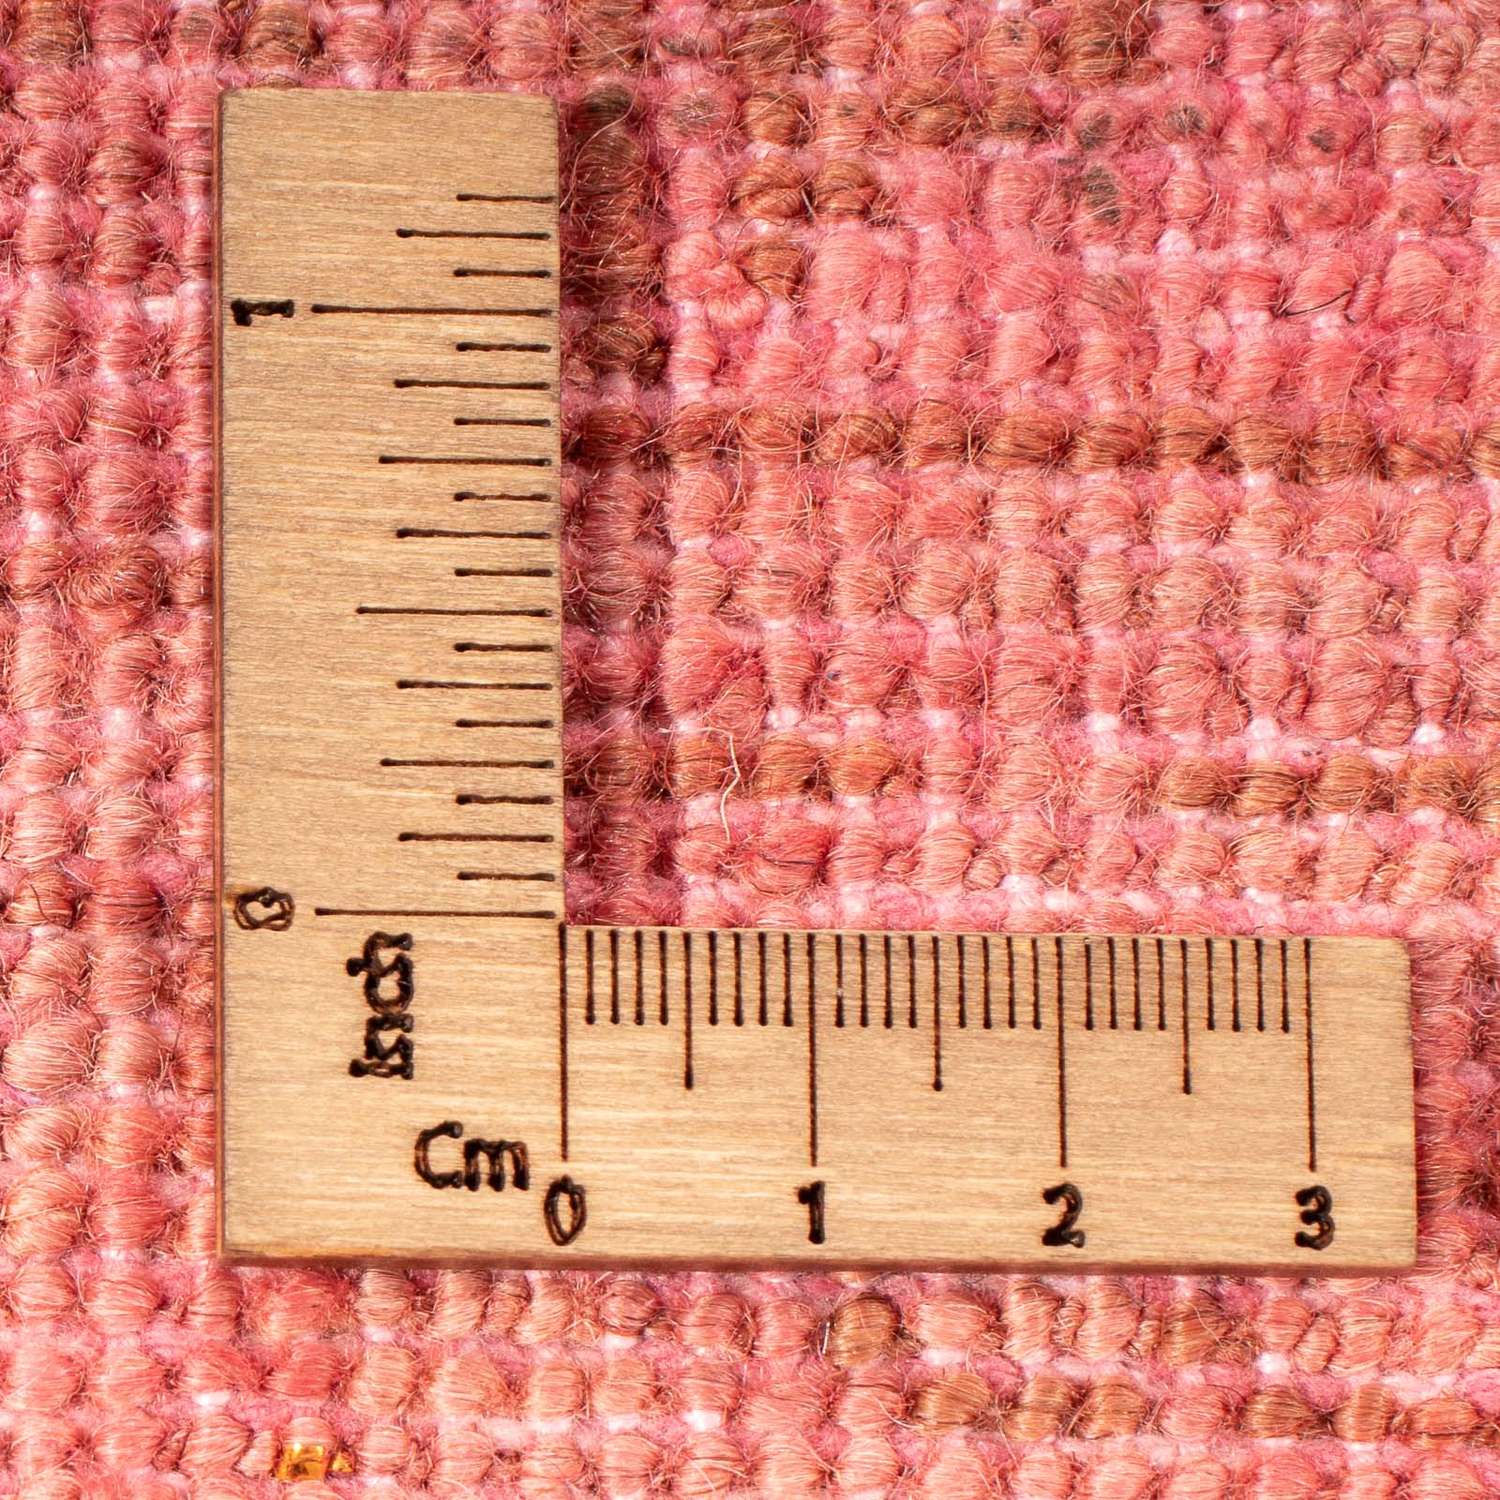 Ziegler Carpet - 305 x 204 cm - pink